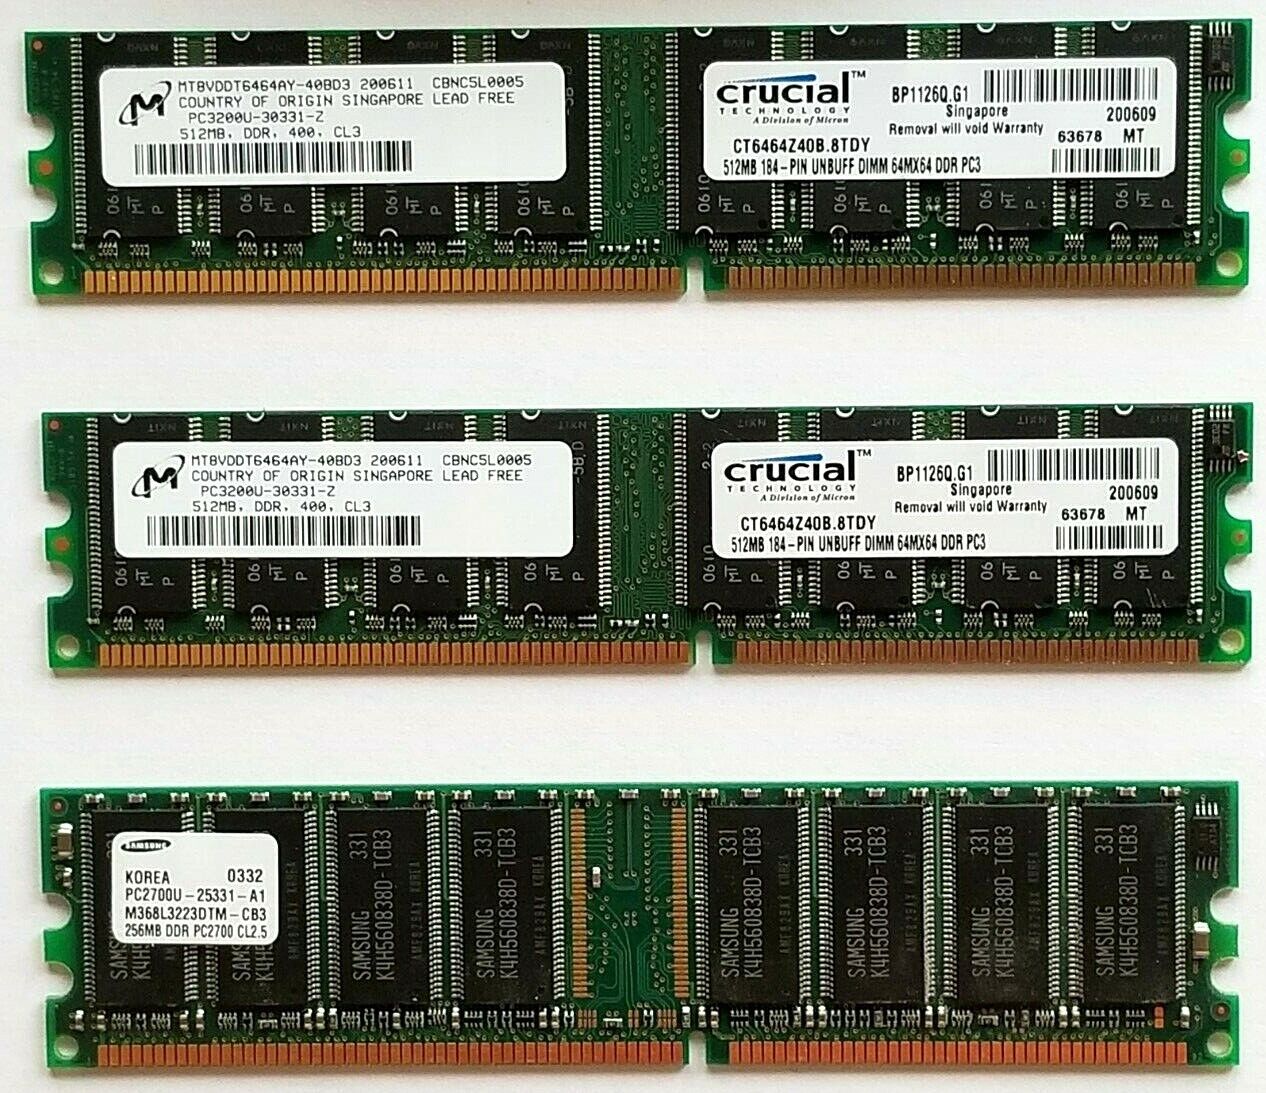 2x Crucial 184-pin 512mb unbuff DIMM 64MX64 DDR PC3 + 1 Samsung 256mb DDR PC2700